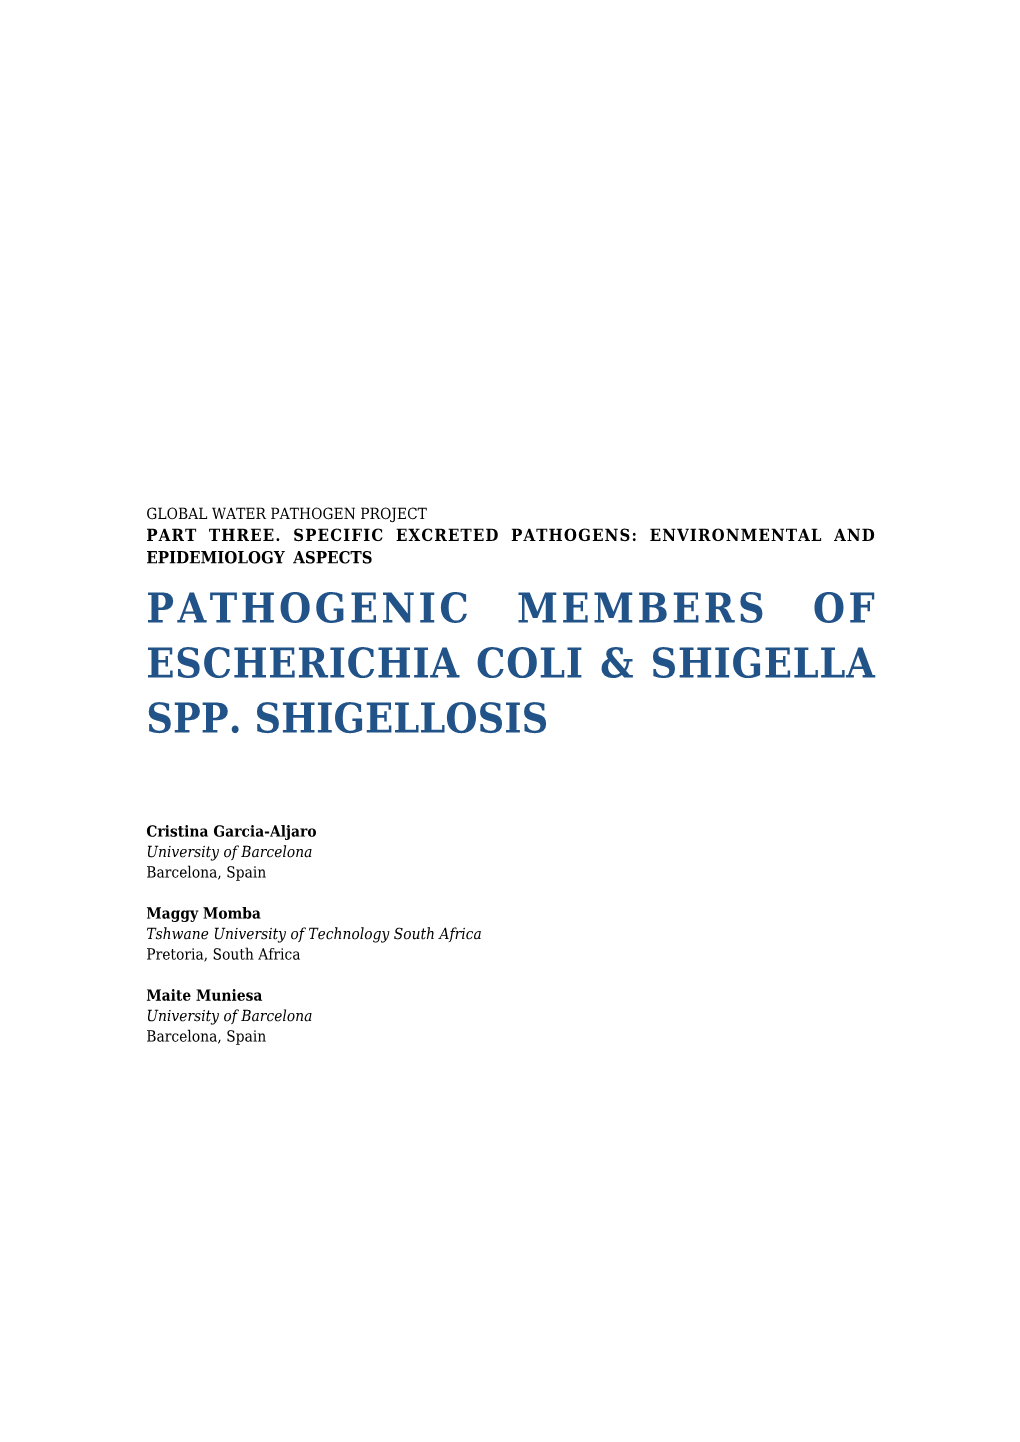 Pathogenic Members of Escherichia Coli & Shigella